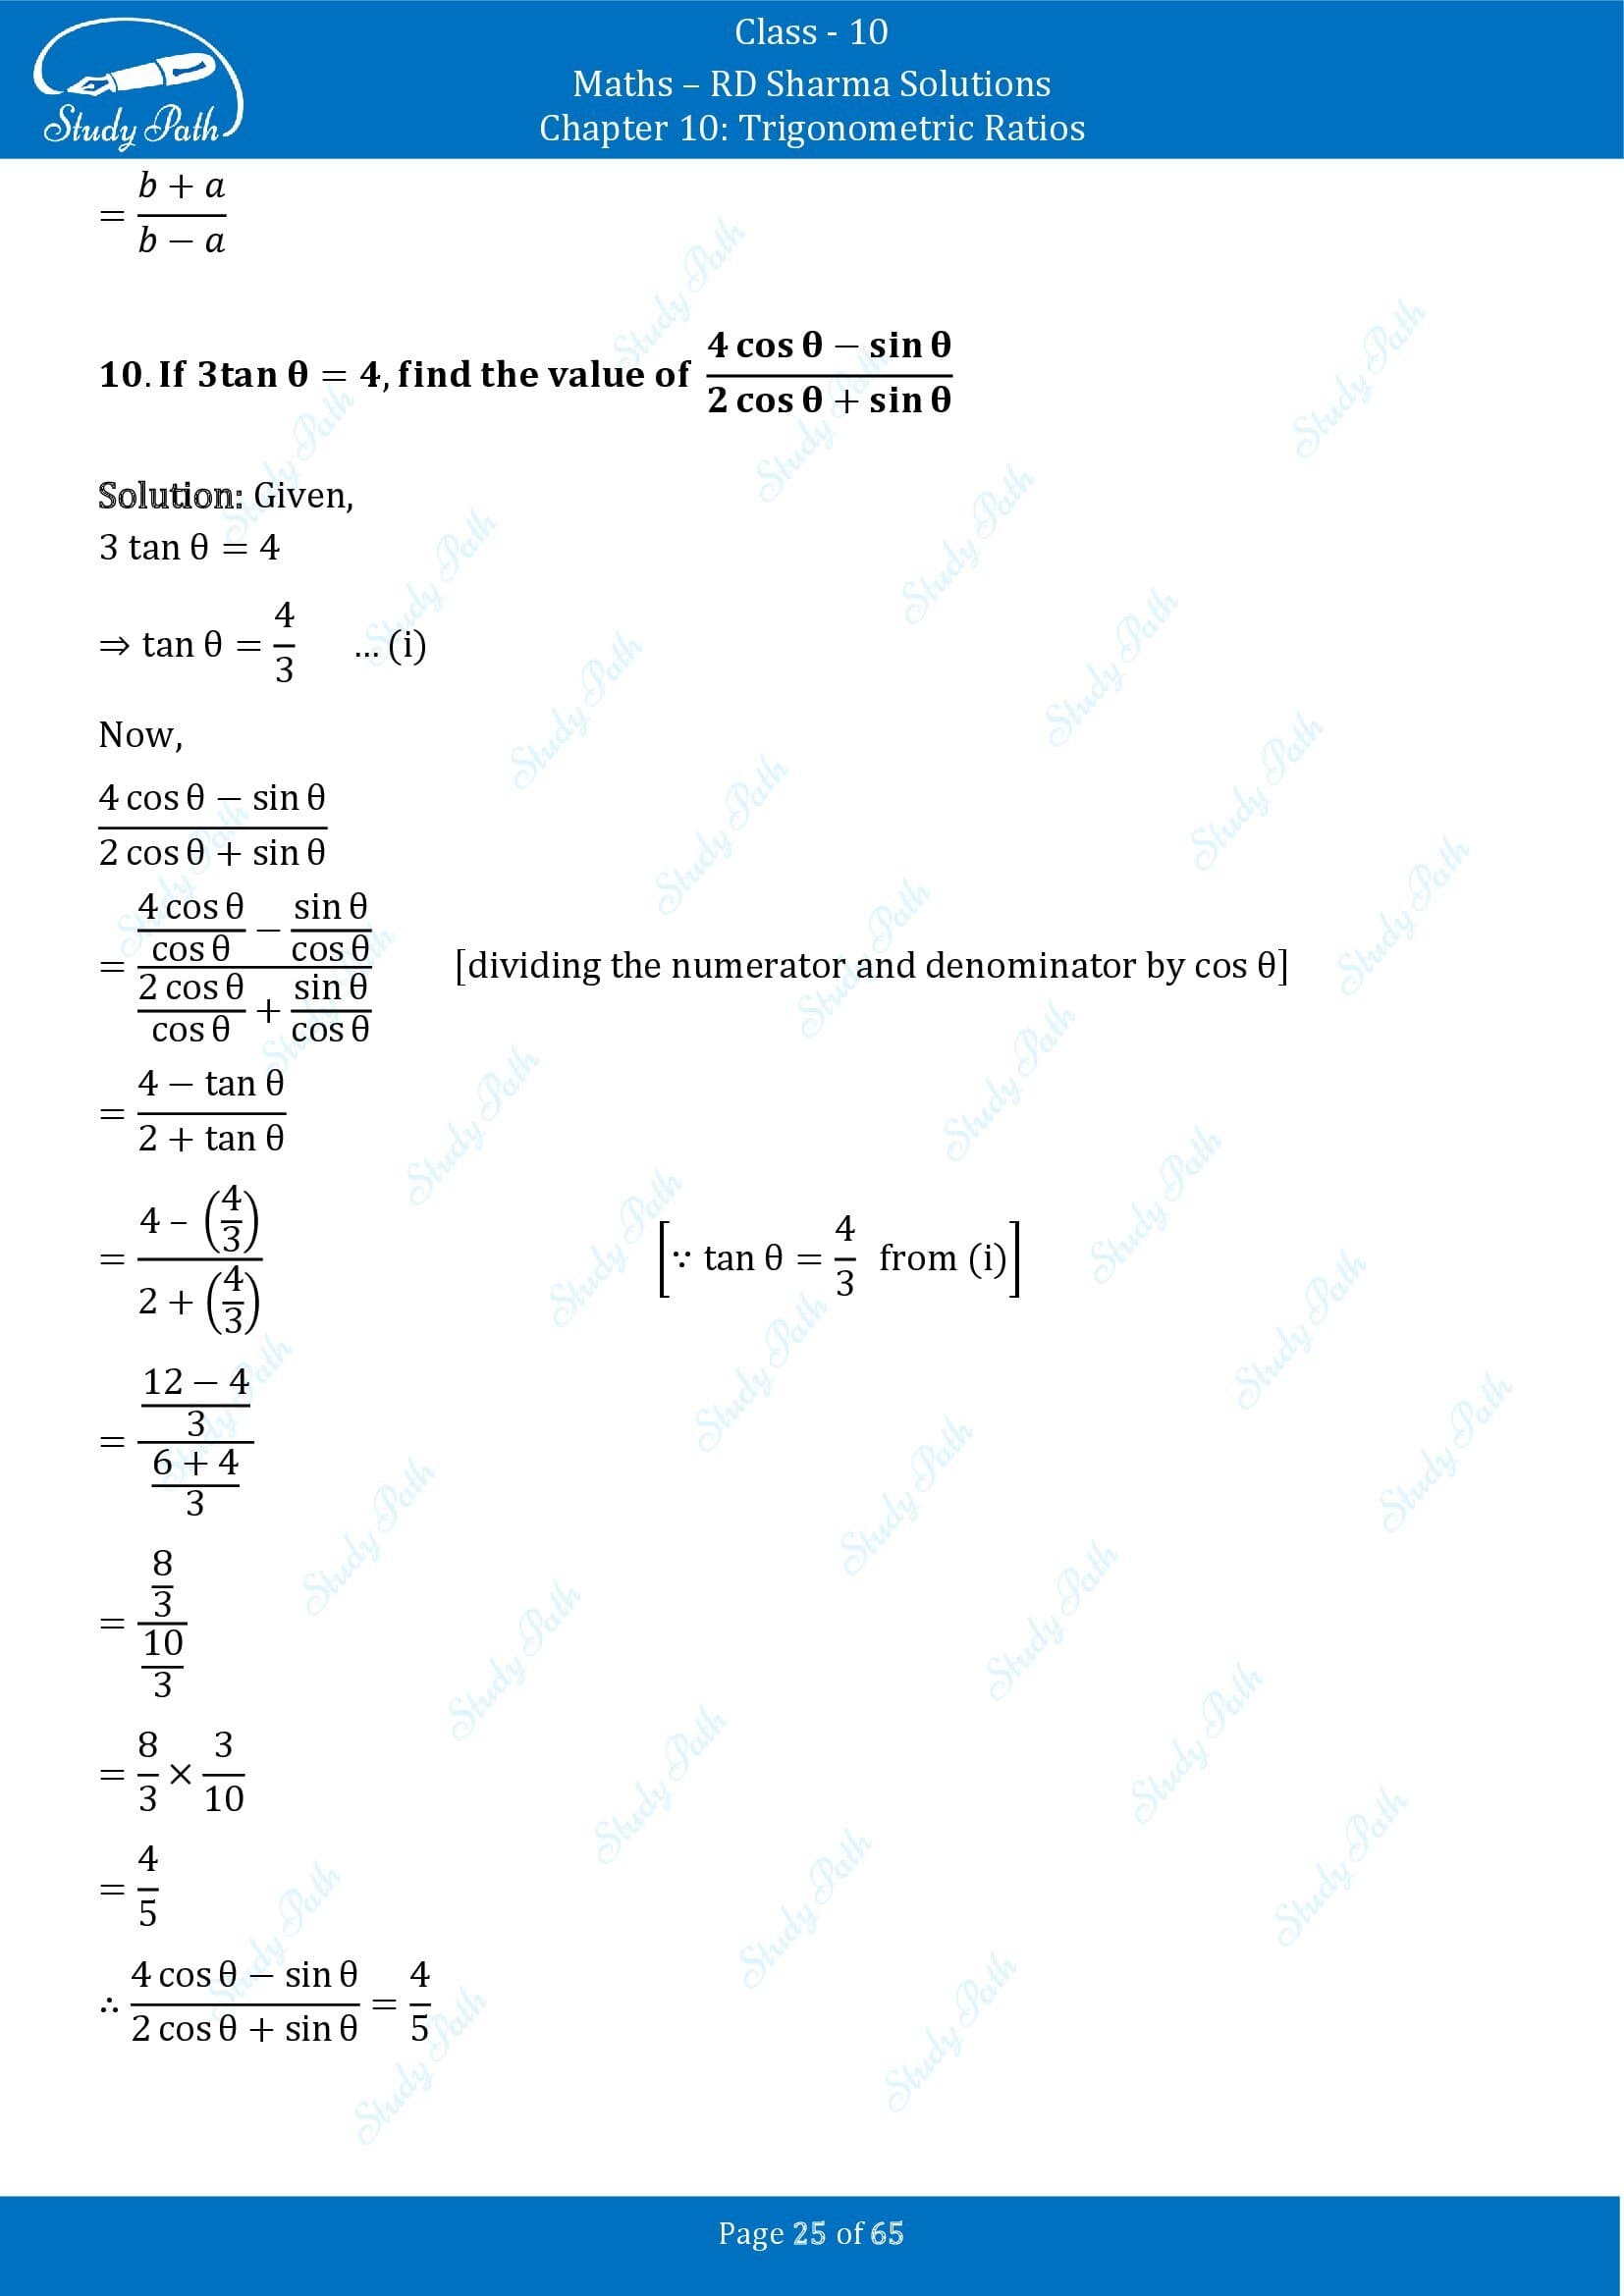 RD Sharma Solutions Class 10 Chapter 10 Trigonometric Ratios Exercise 10.1 00025